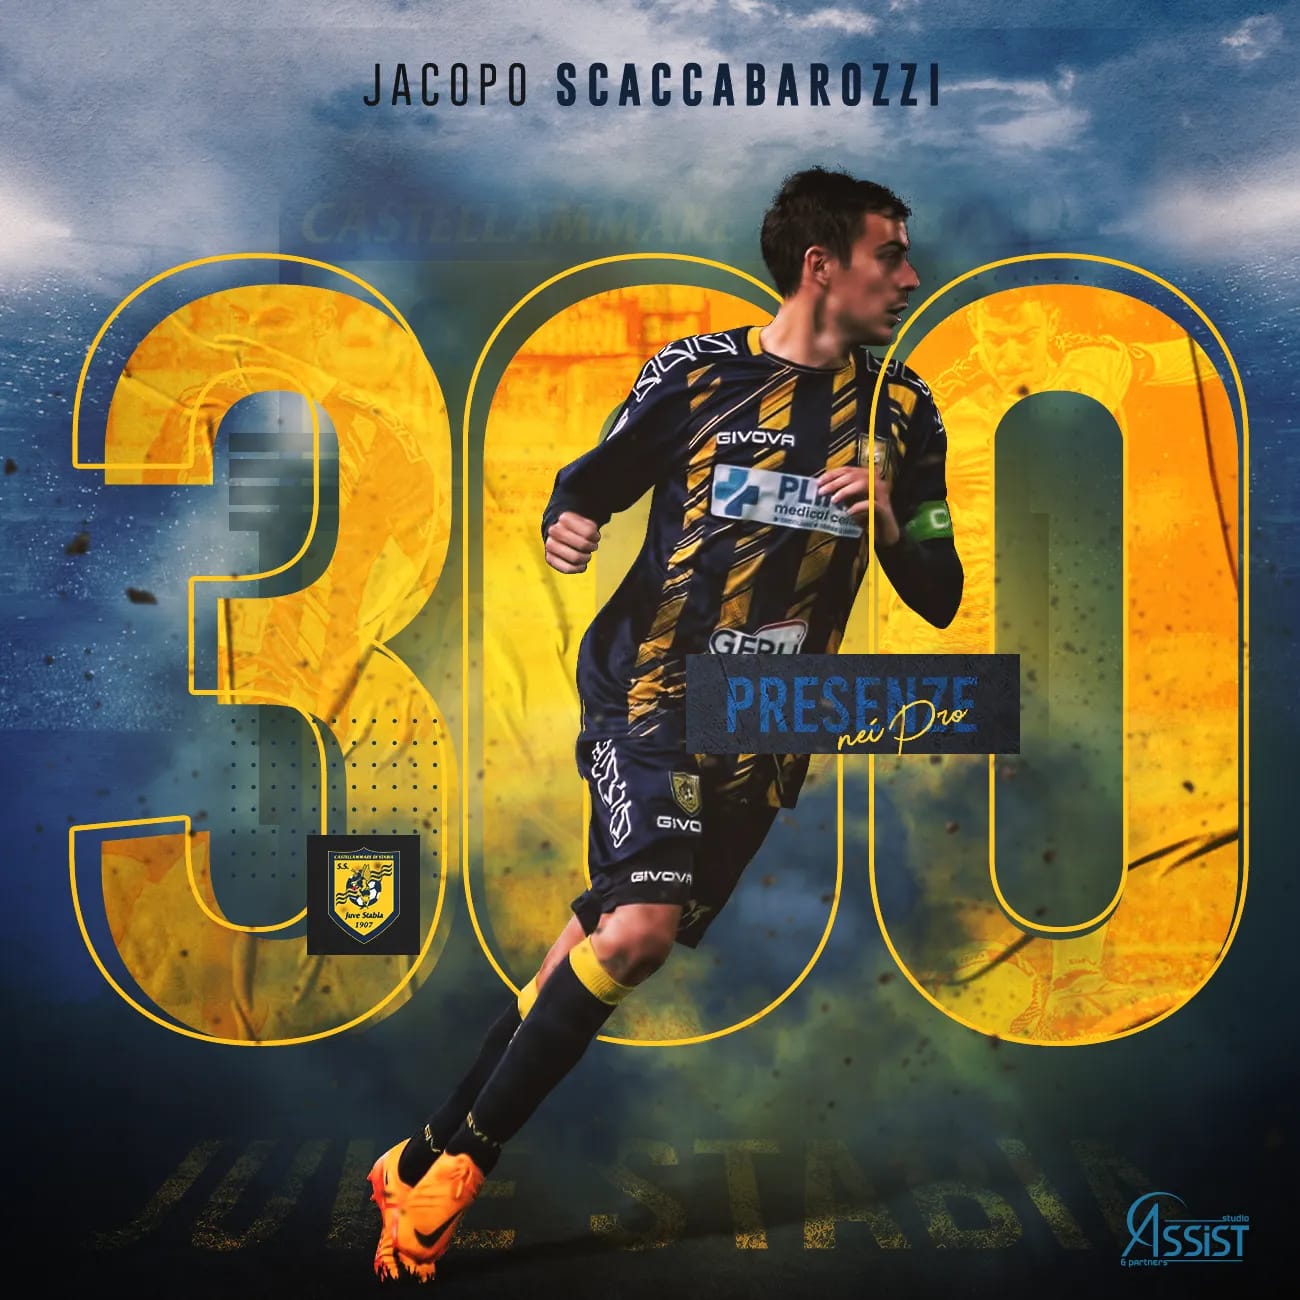 Jacopo_Scaccabarozzi_Studio_Assist Jacopo Scaccabarozzi raggiunge quota 300 nei Professionisti